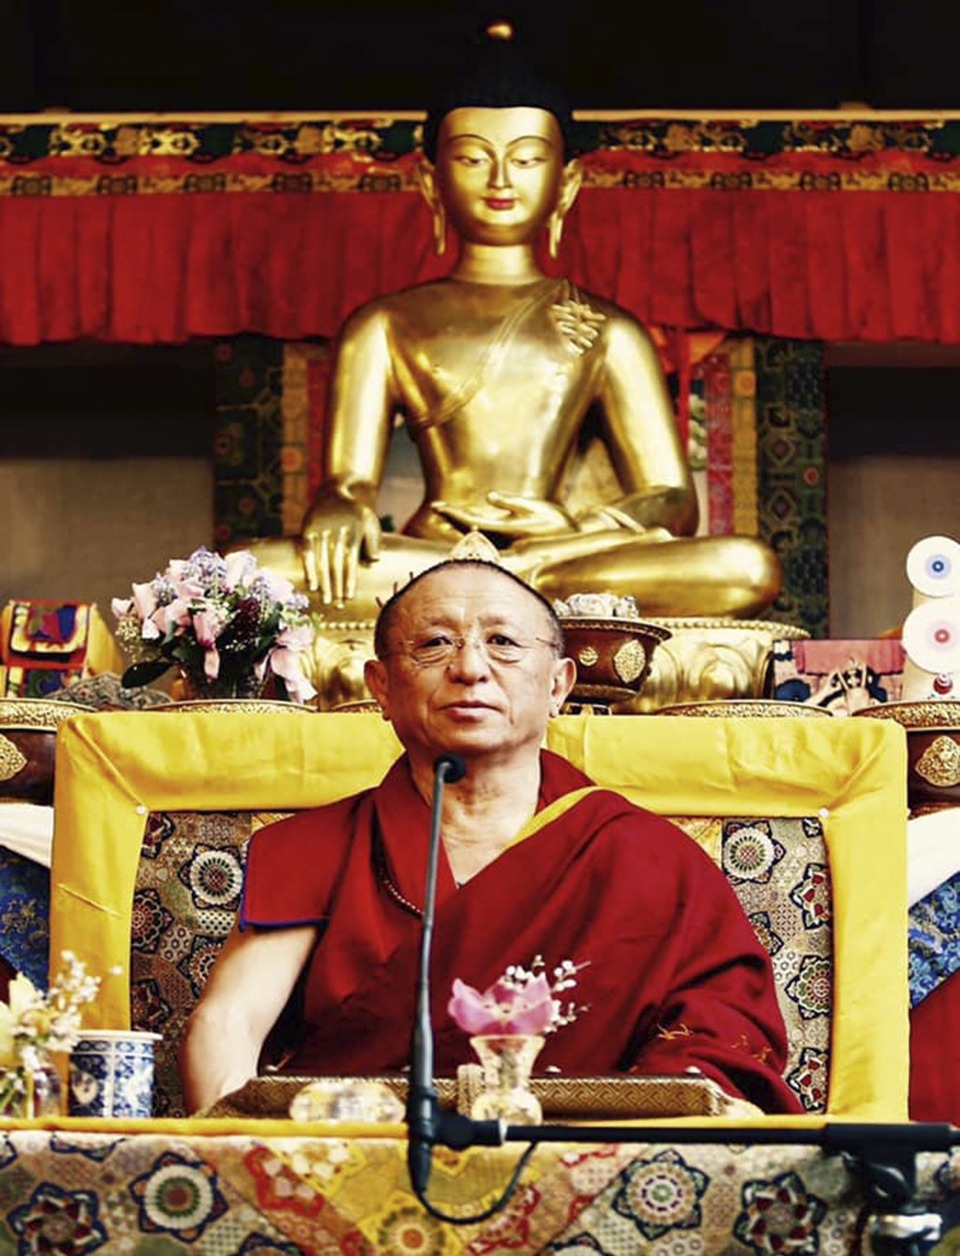 Chökyi Nyima Rinpoche